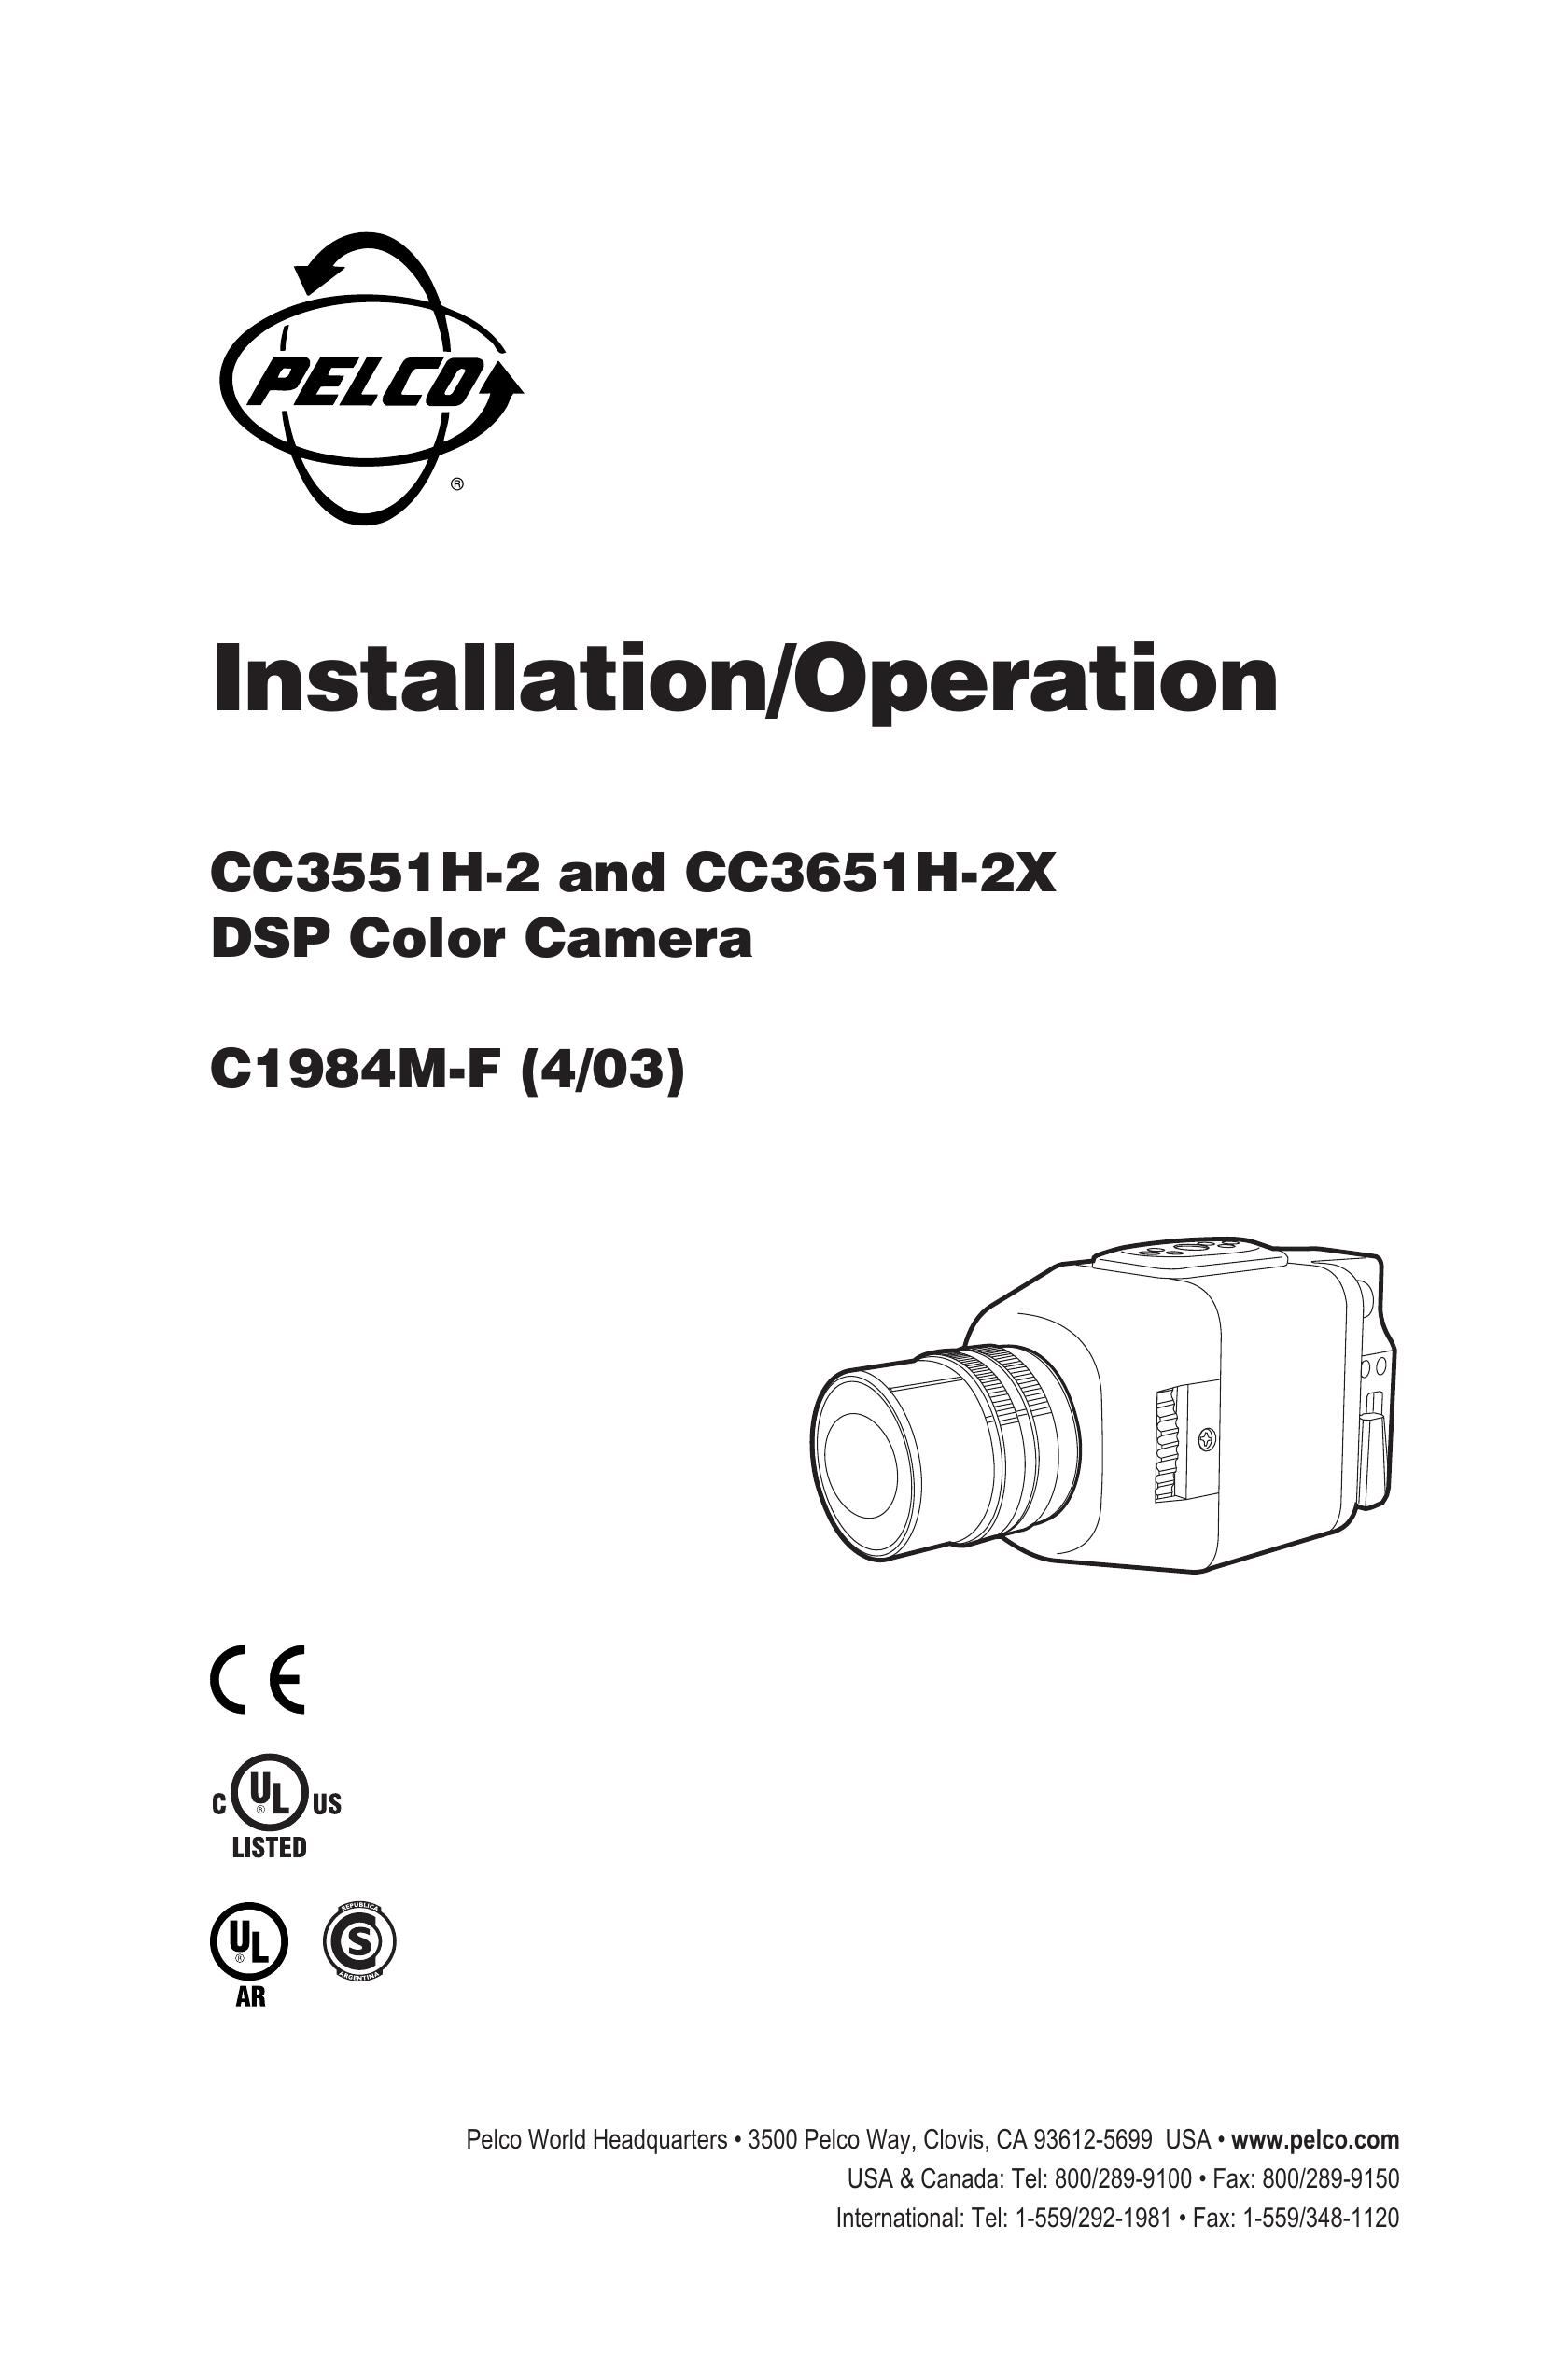 Pelco CC3651H-2X Digital Camera User Manual